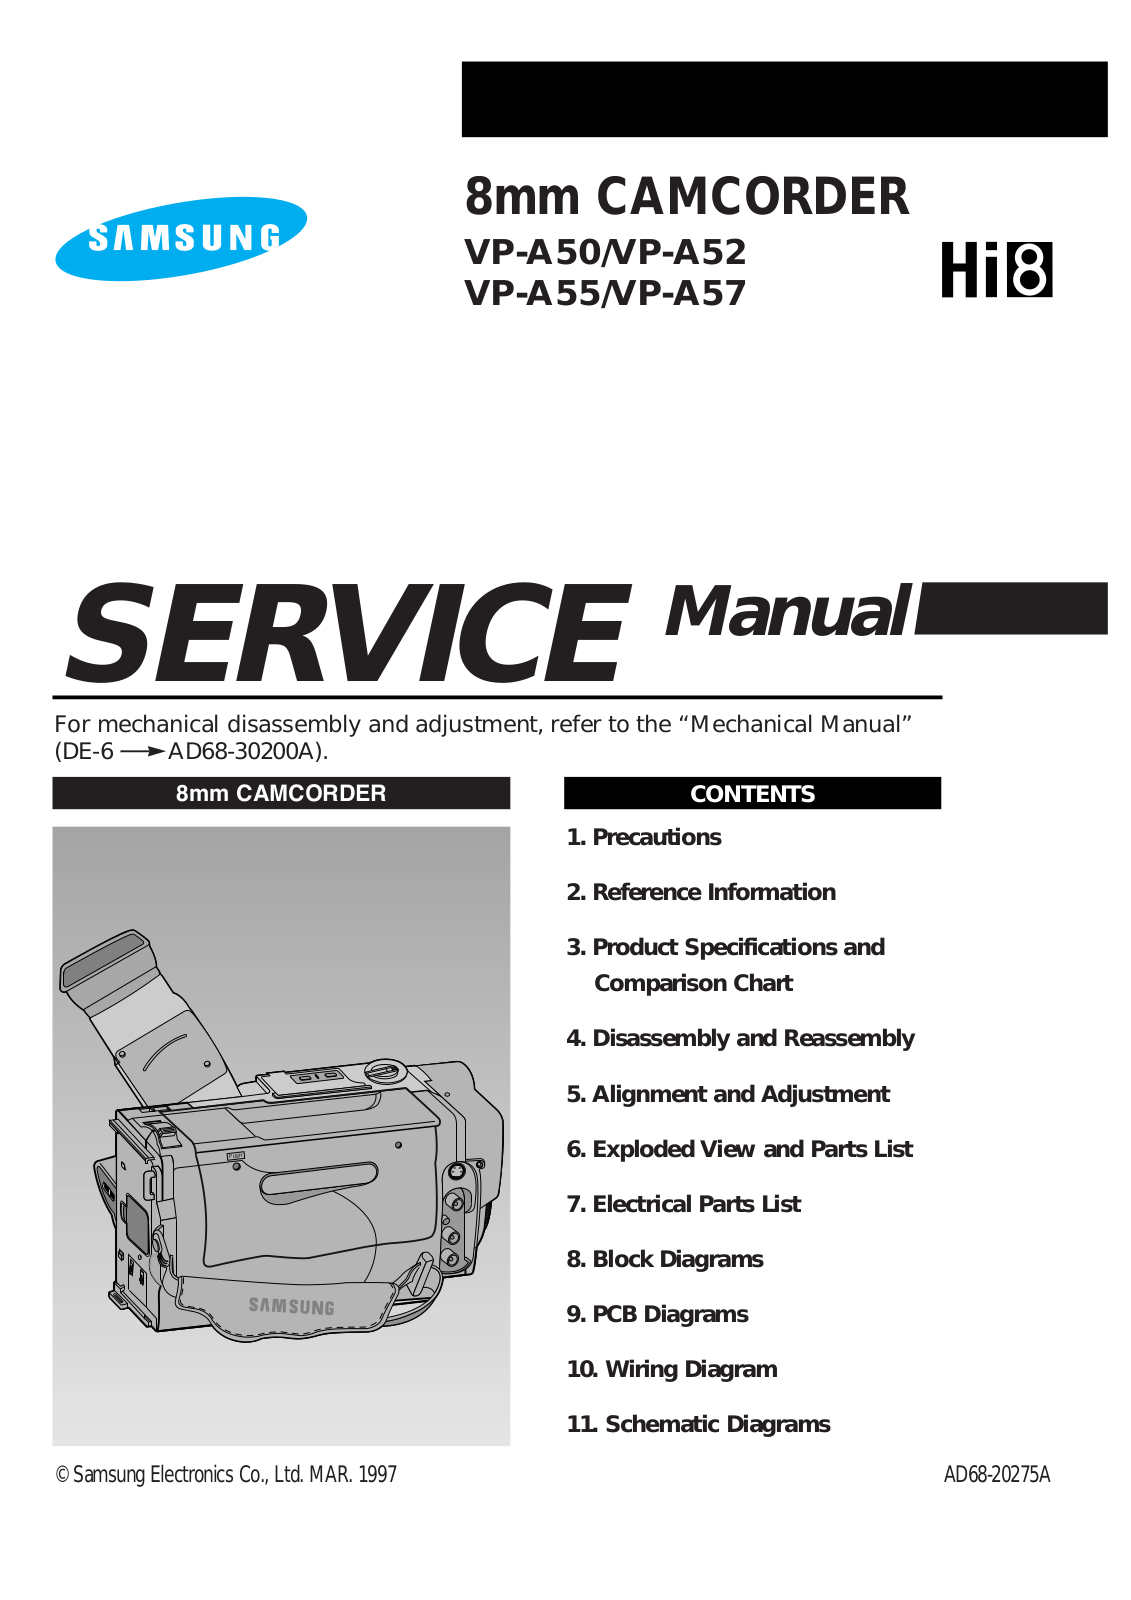 SAMSUNG VP-A50, 52, 55, 57 Service Manual